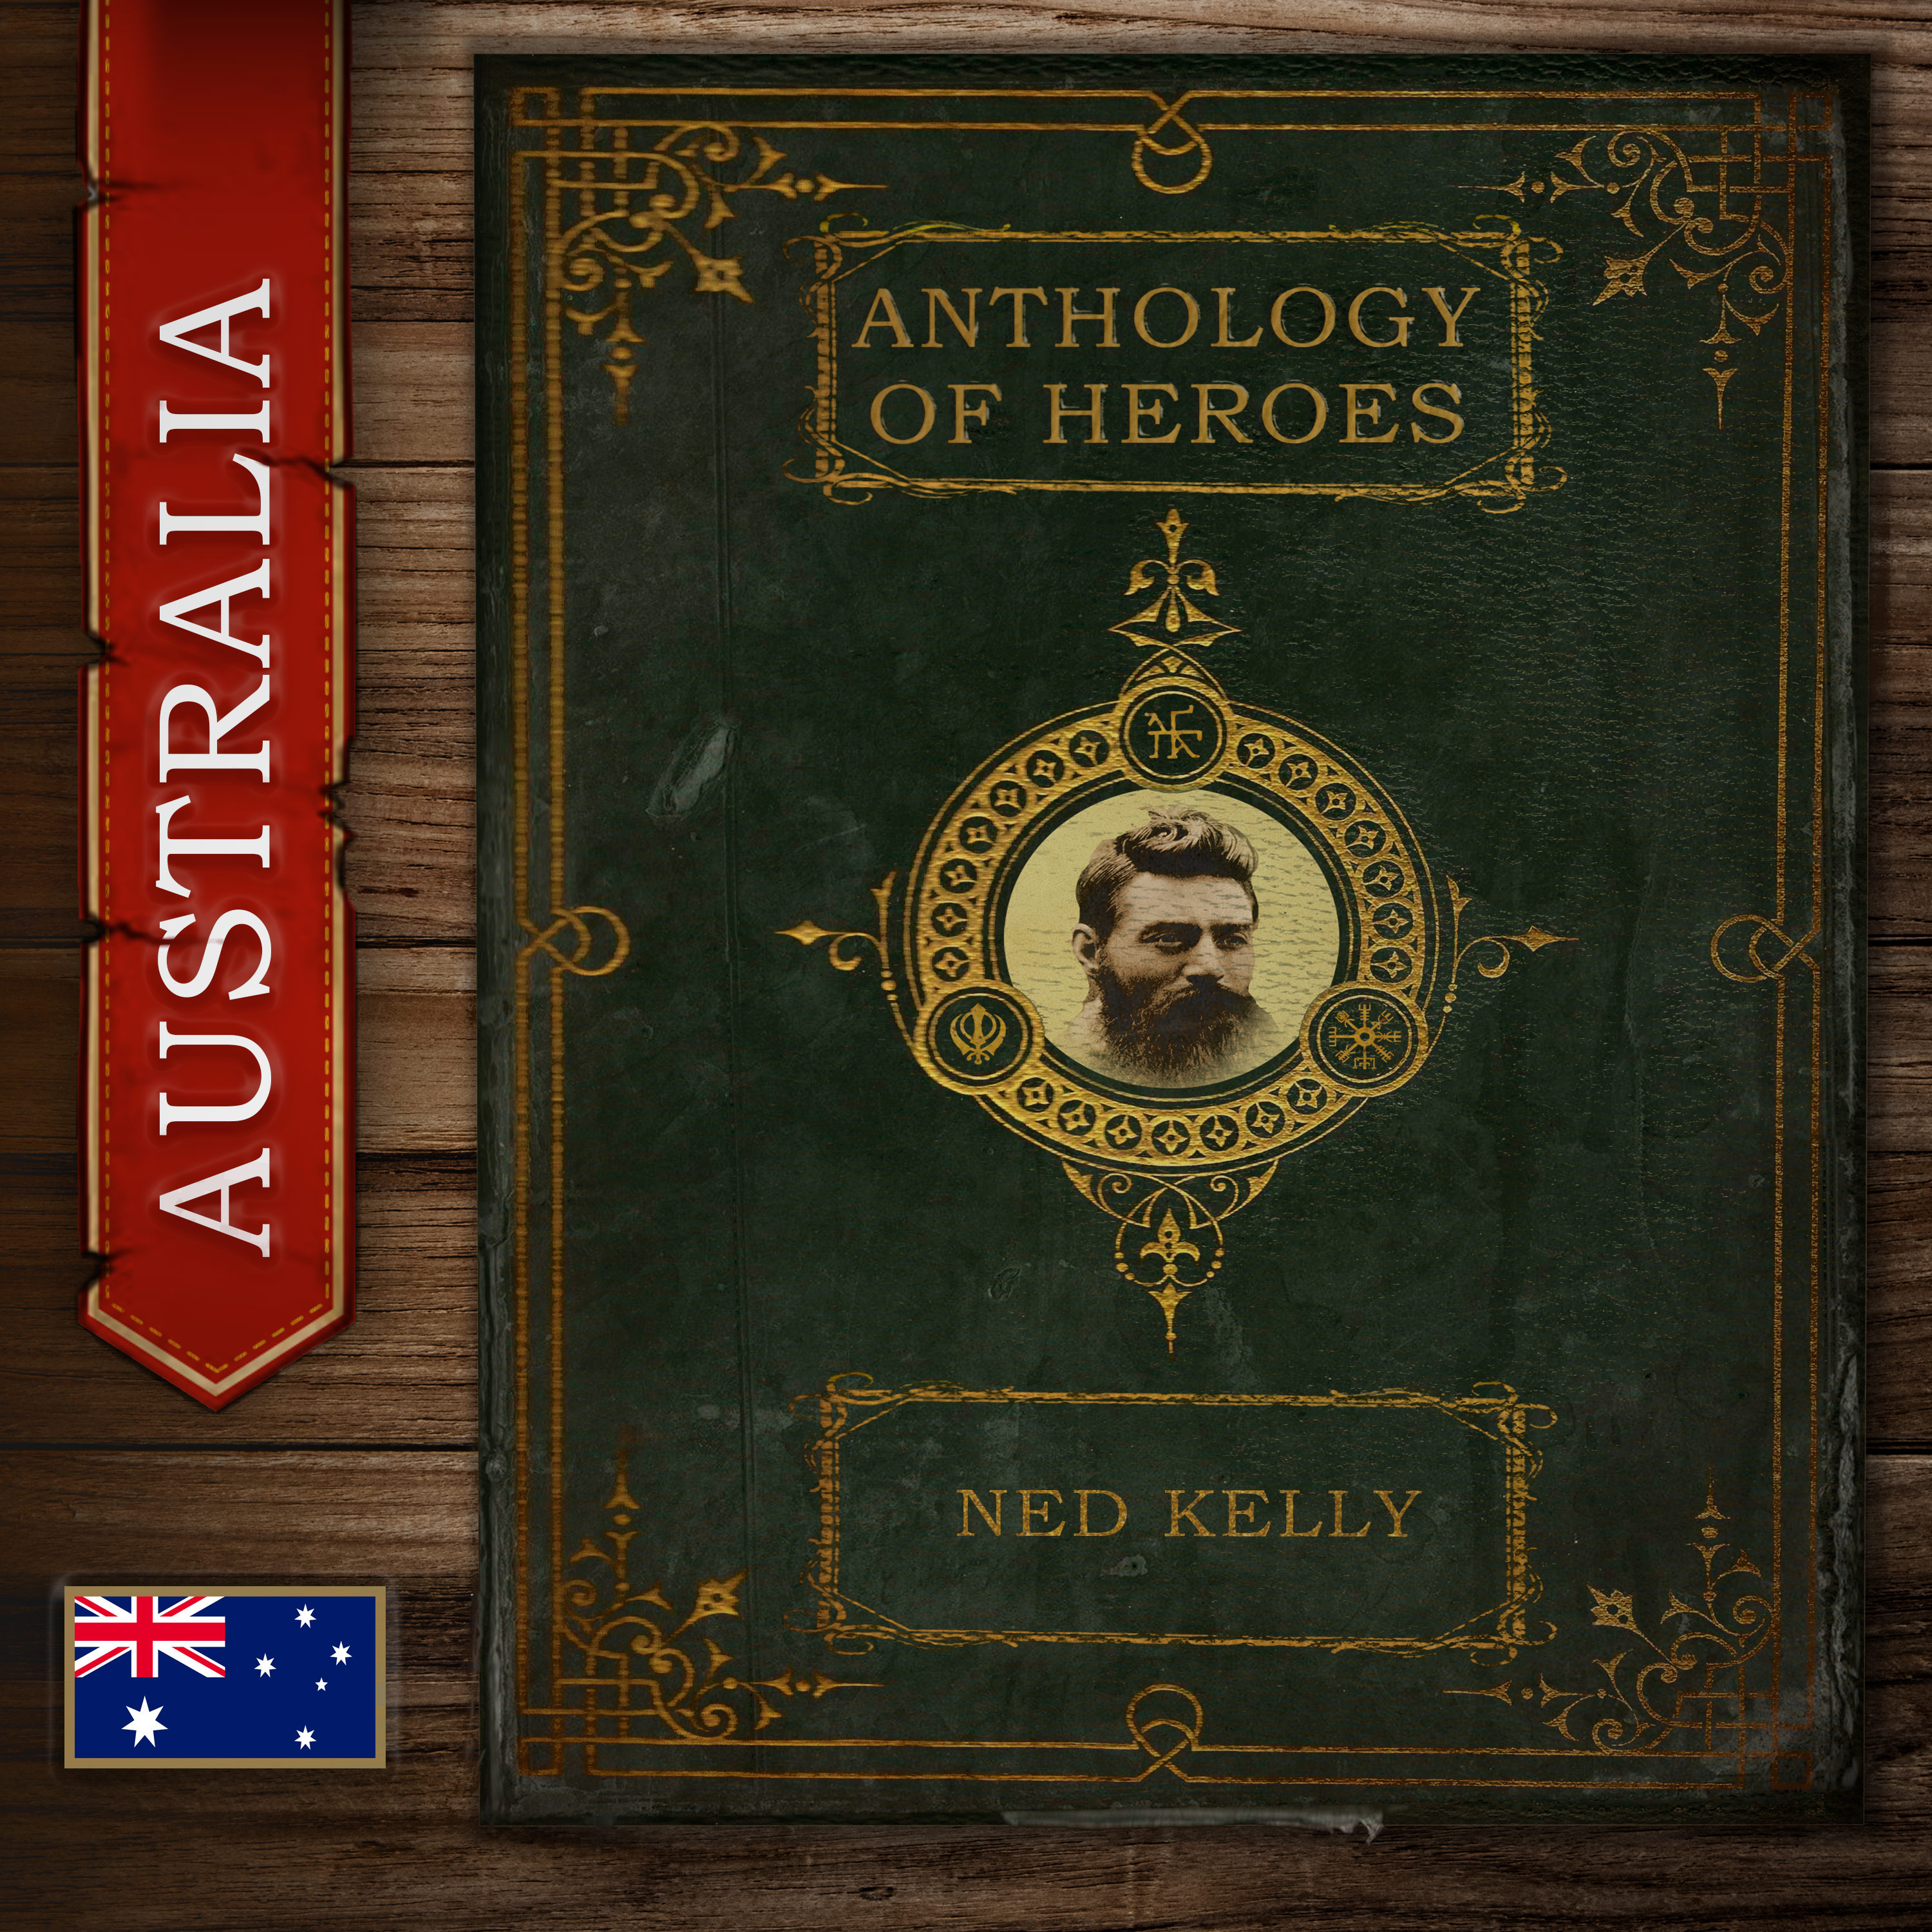 Ned Kelly, The Last Bushranger